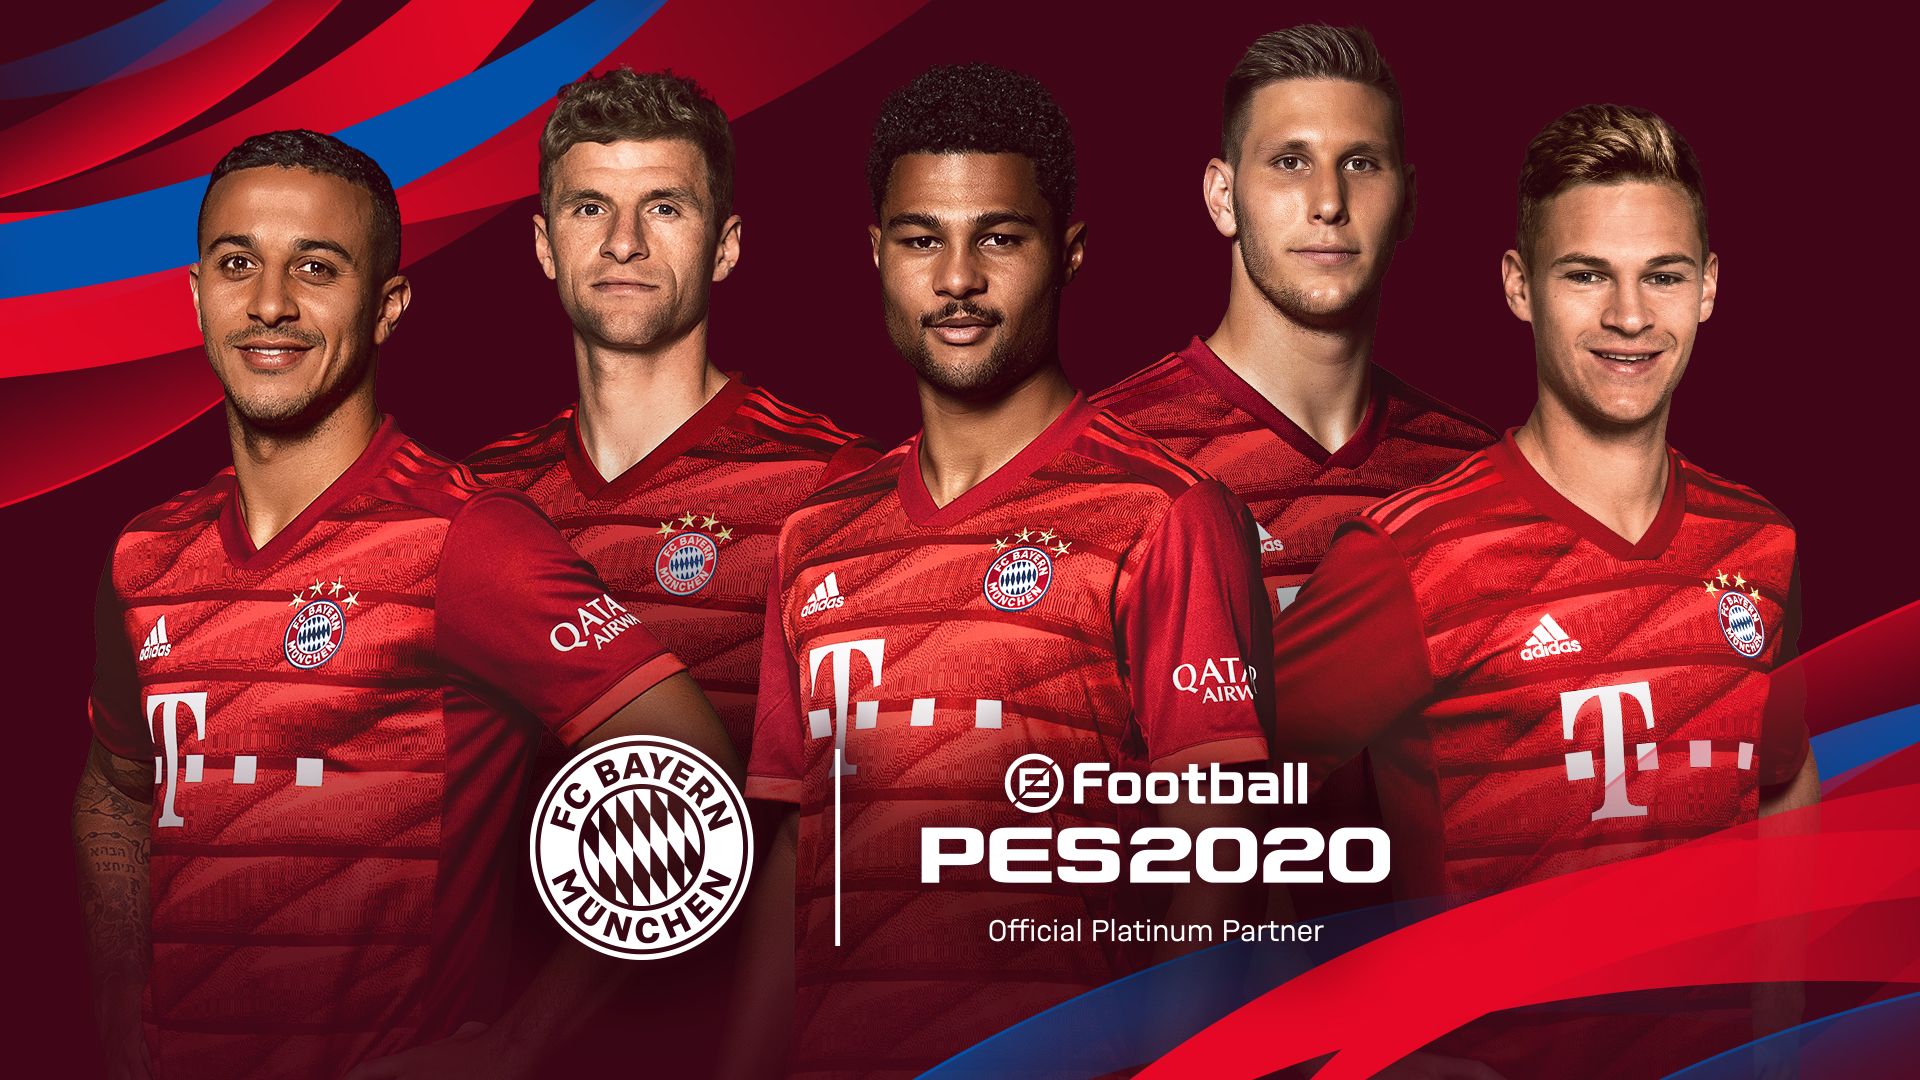 Bayern Munich 2020 Wallpapers - Wallpaper Cave